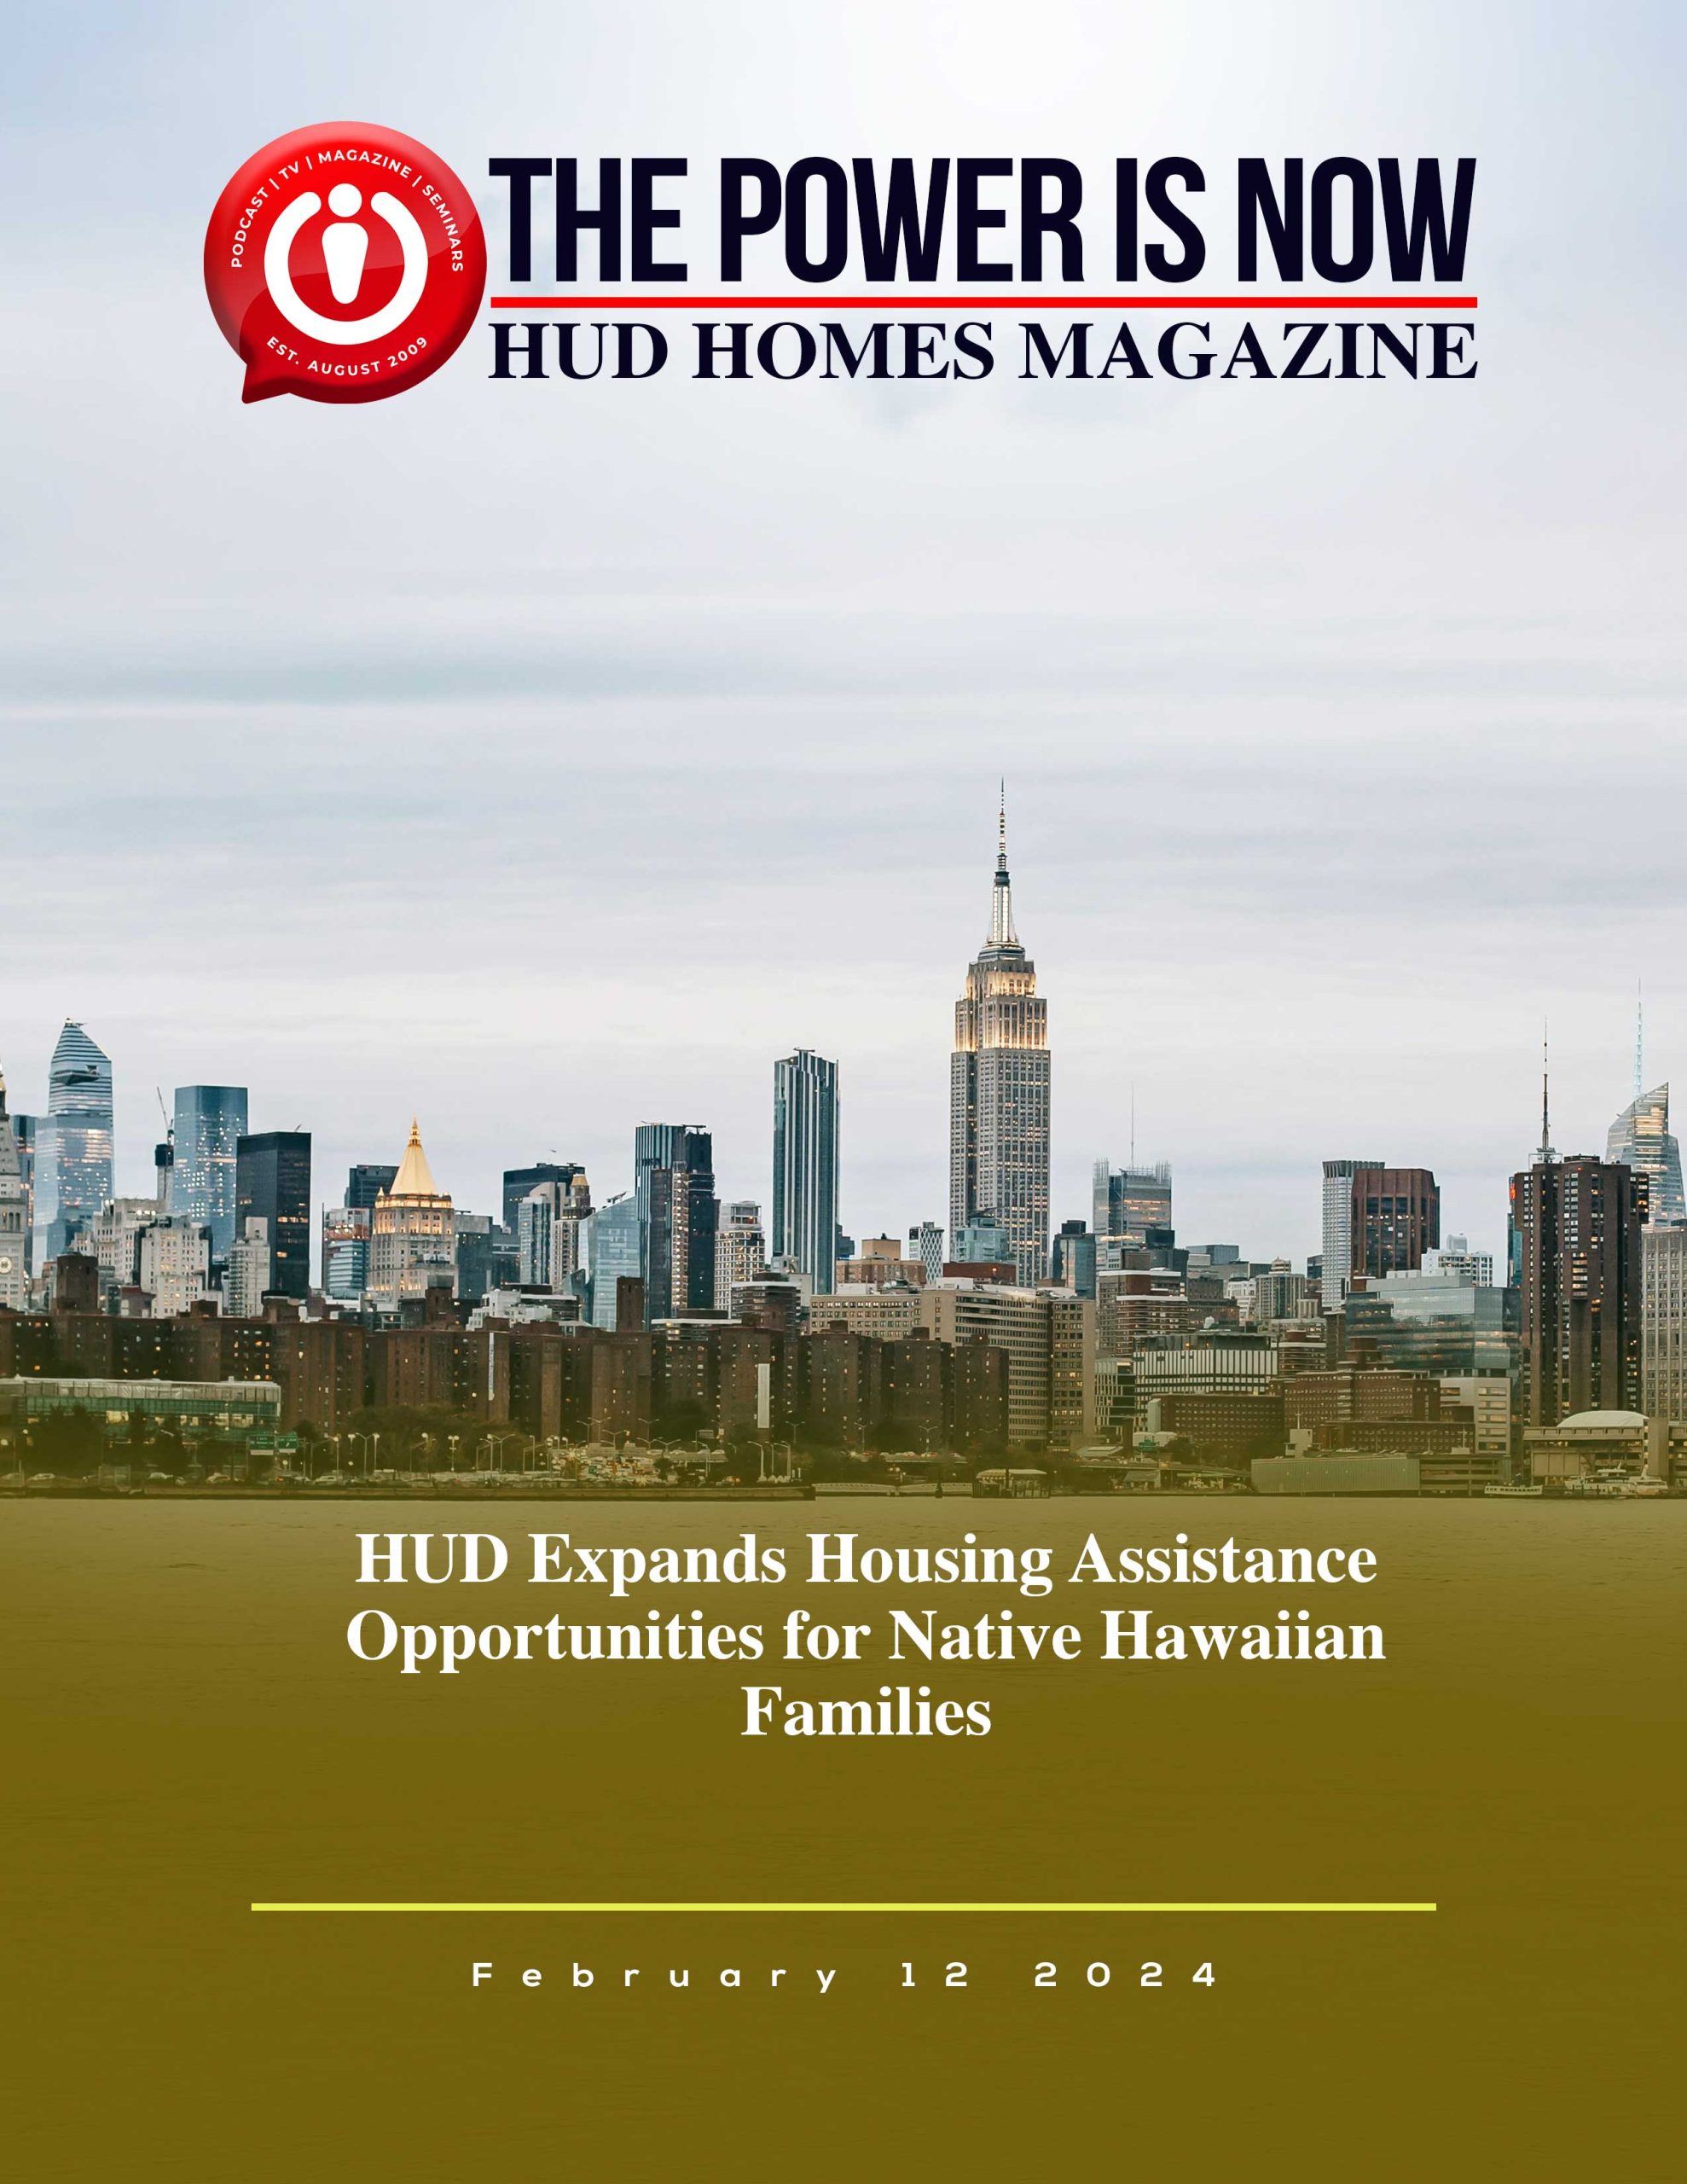 The Power Is Now HUD Homes Magazine; Native Hawaiian Families